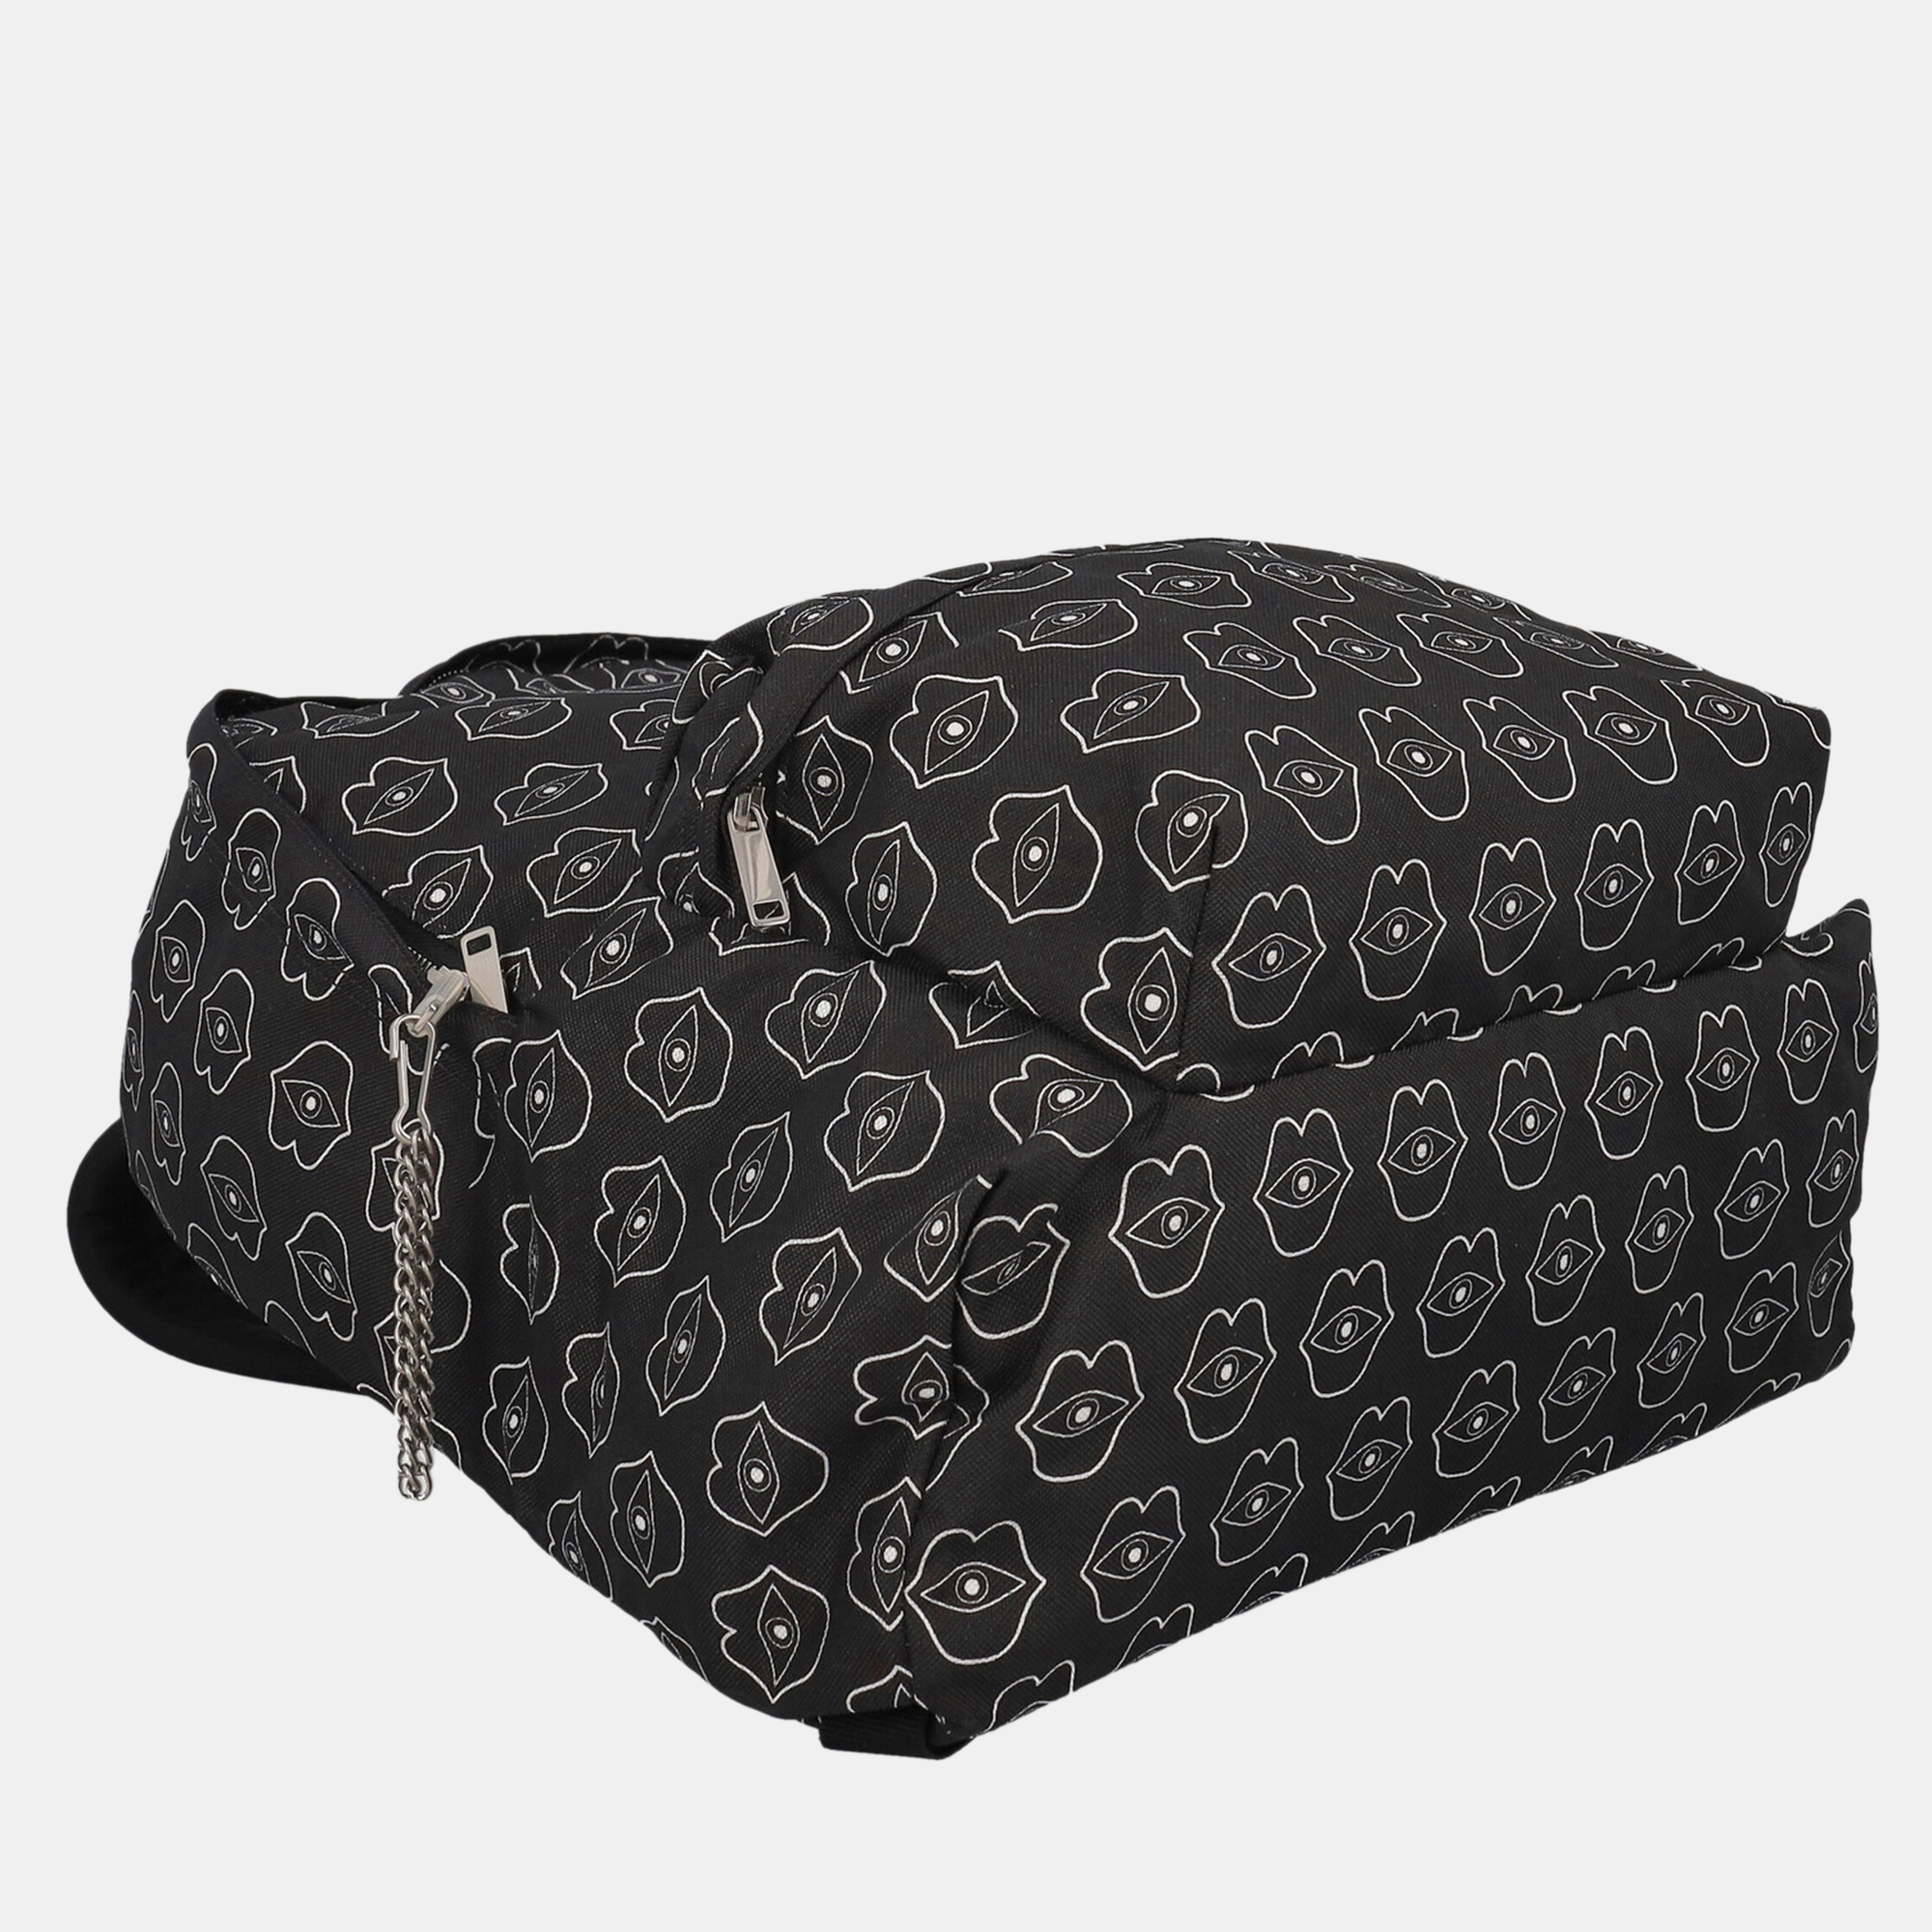 Celine  Women's Synthetic Fibers Backpack - Black - One Size